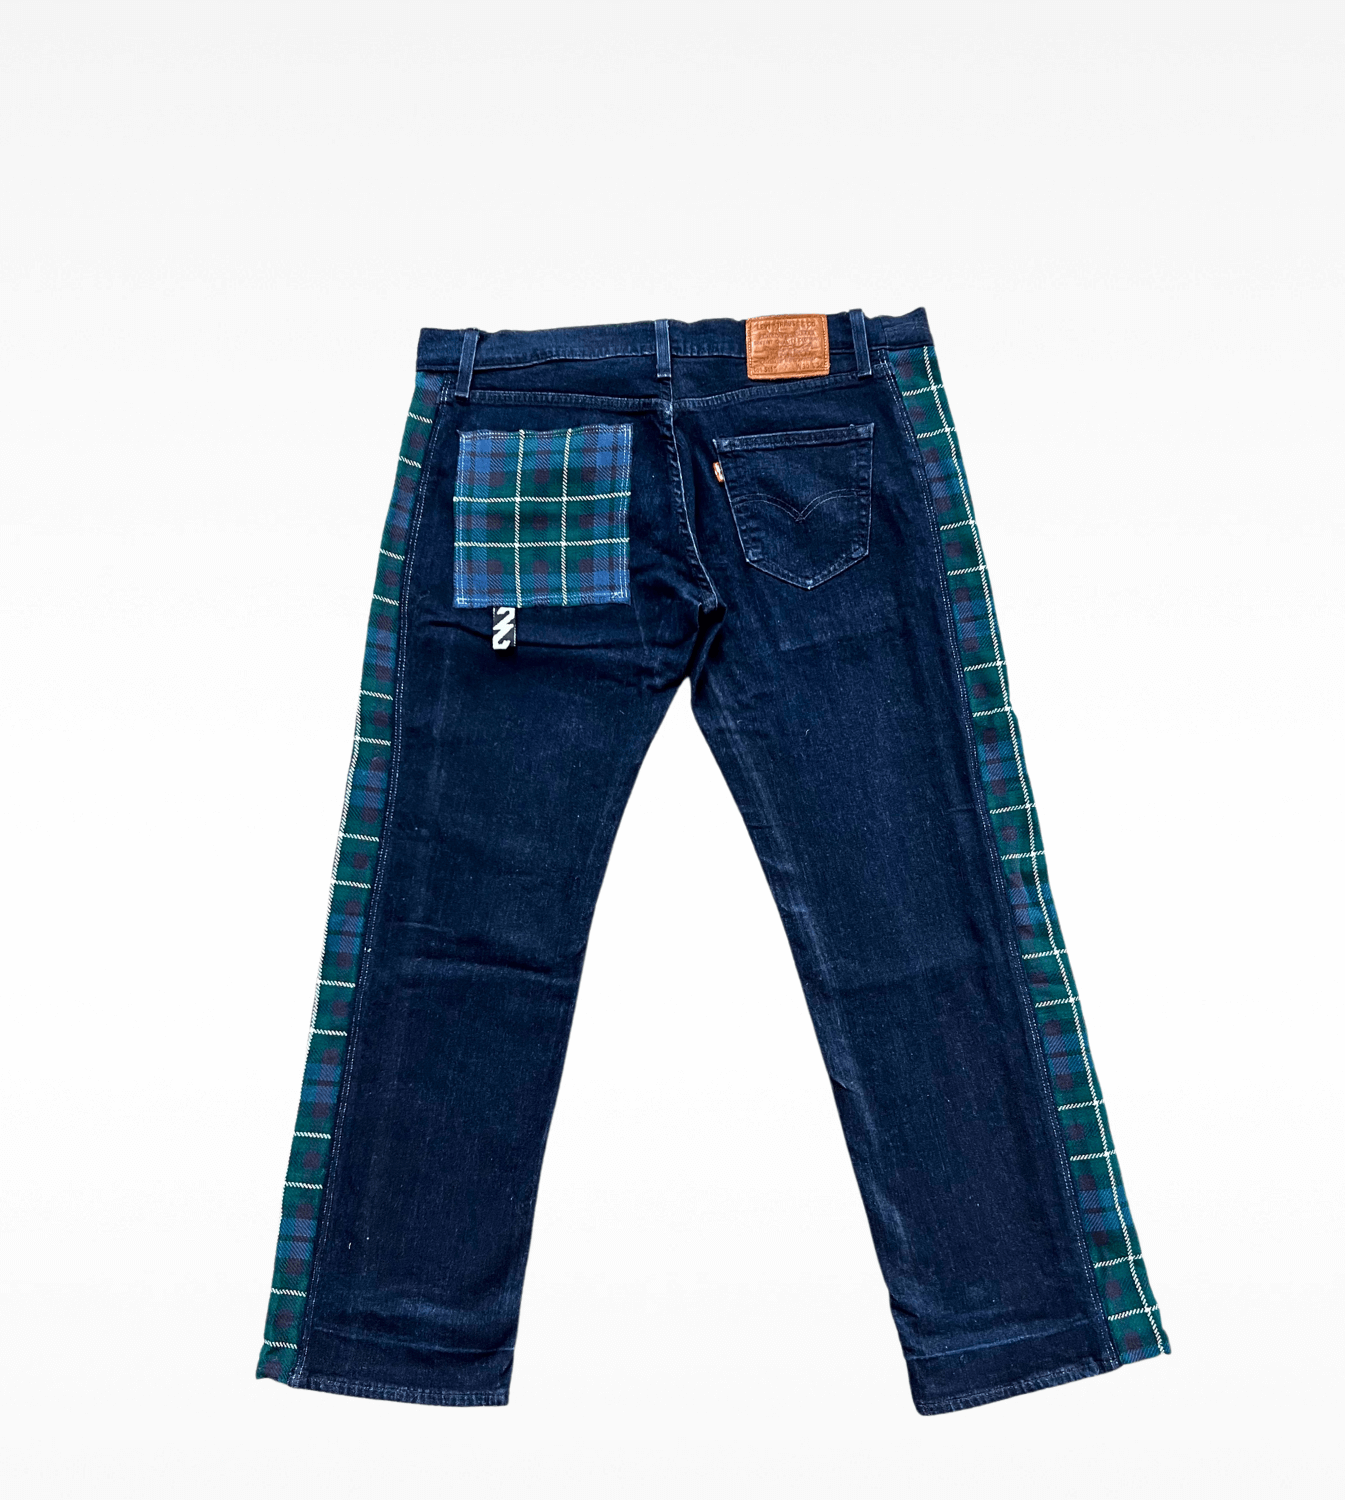 jeans-rework-levis511-2ndechance-madeinfrance-dos